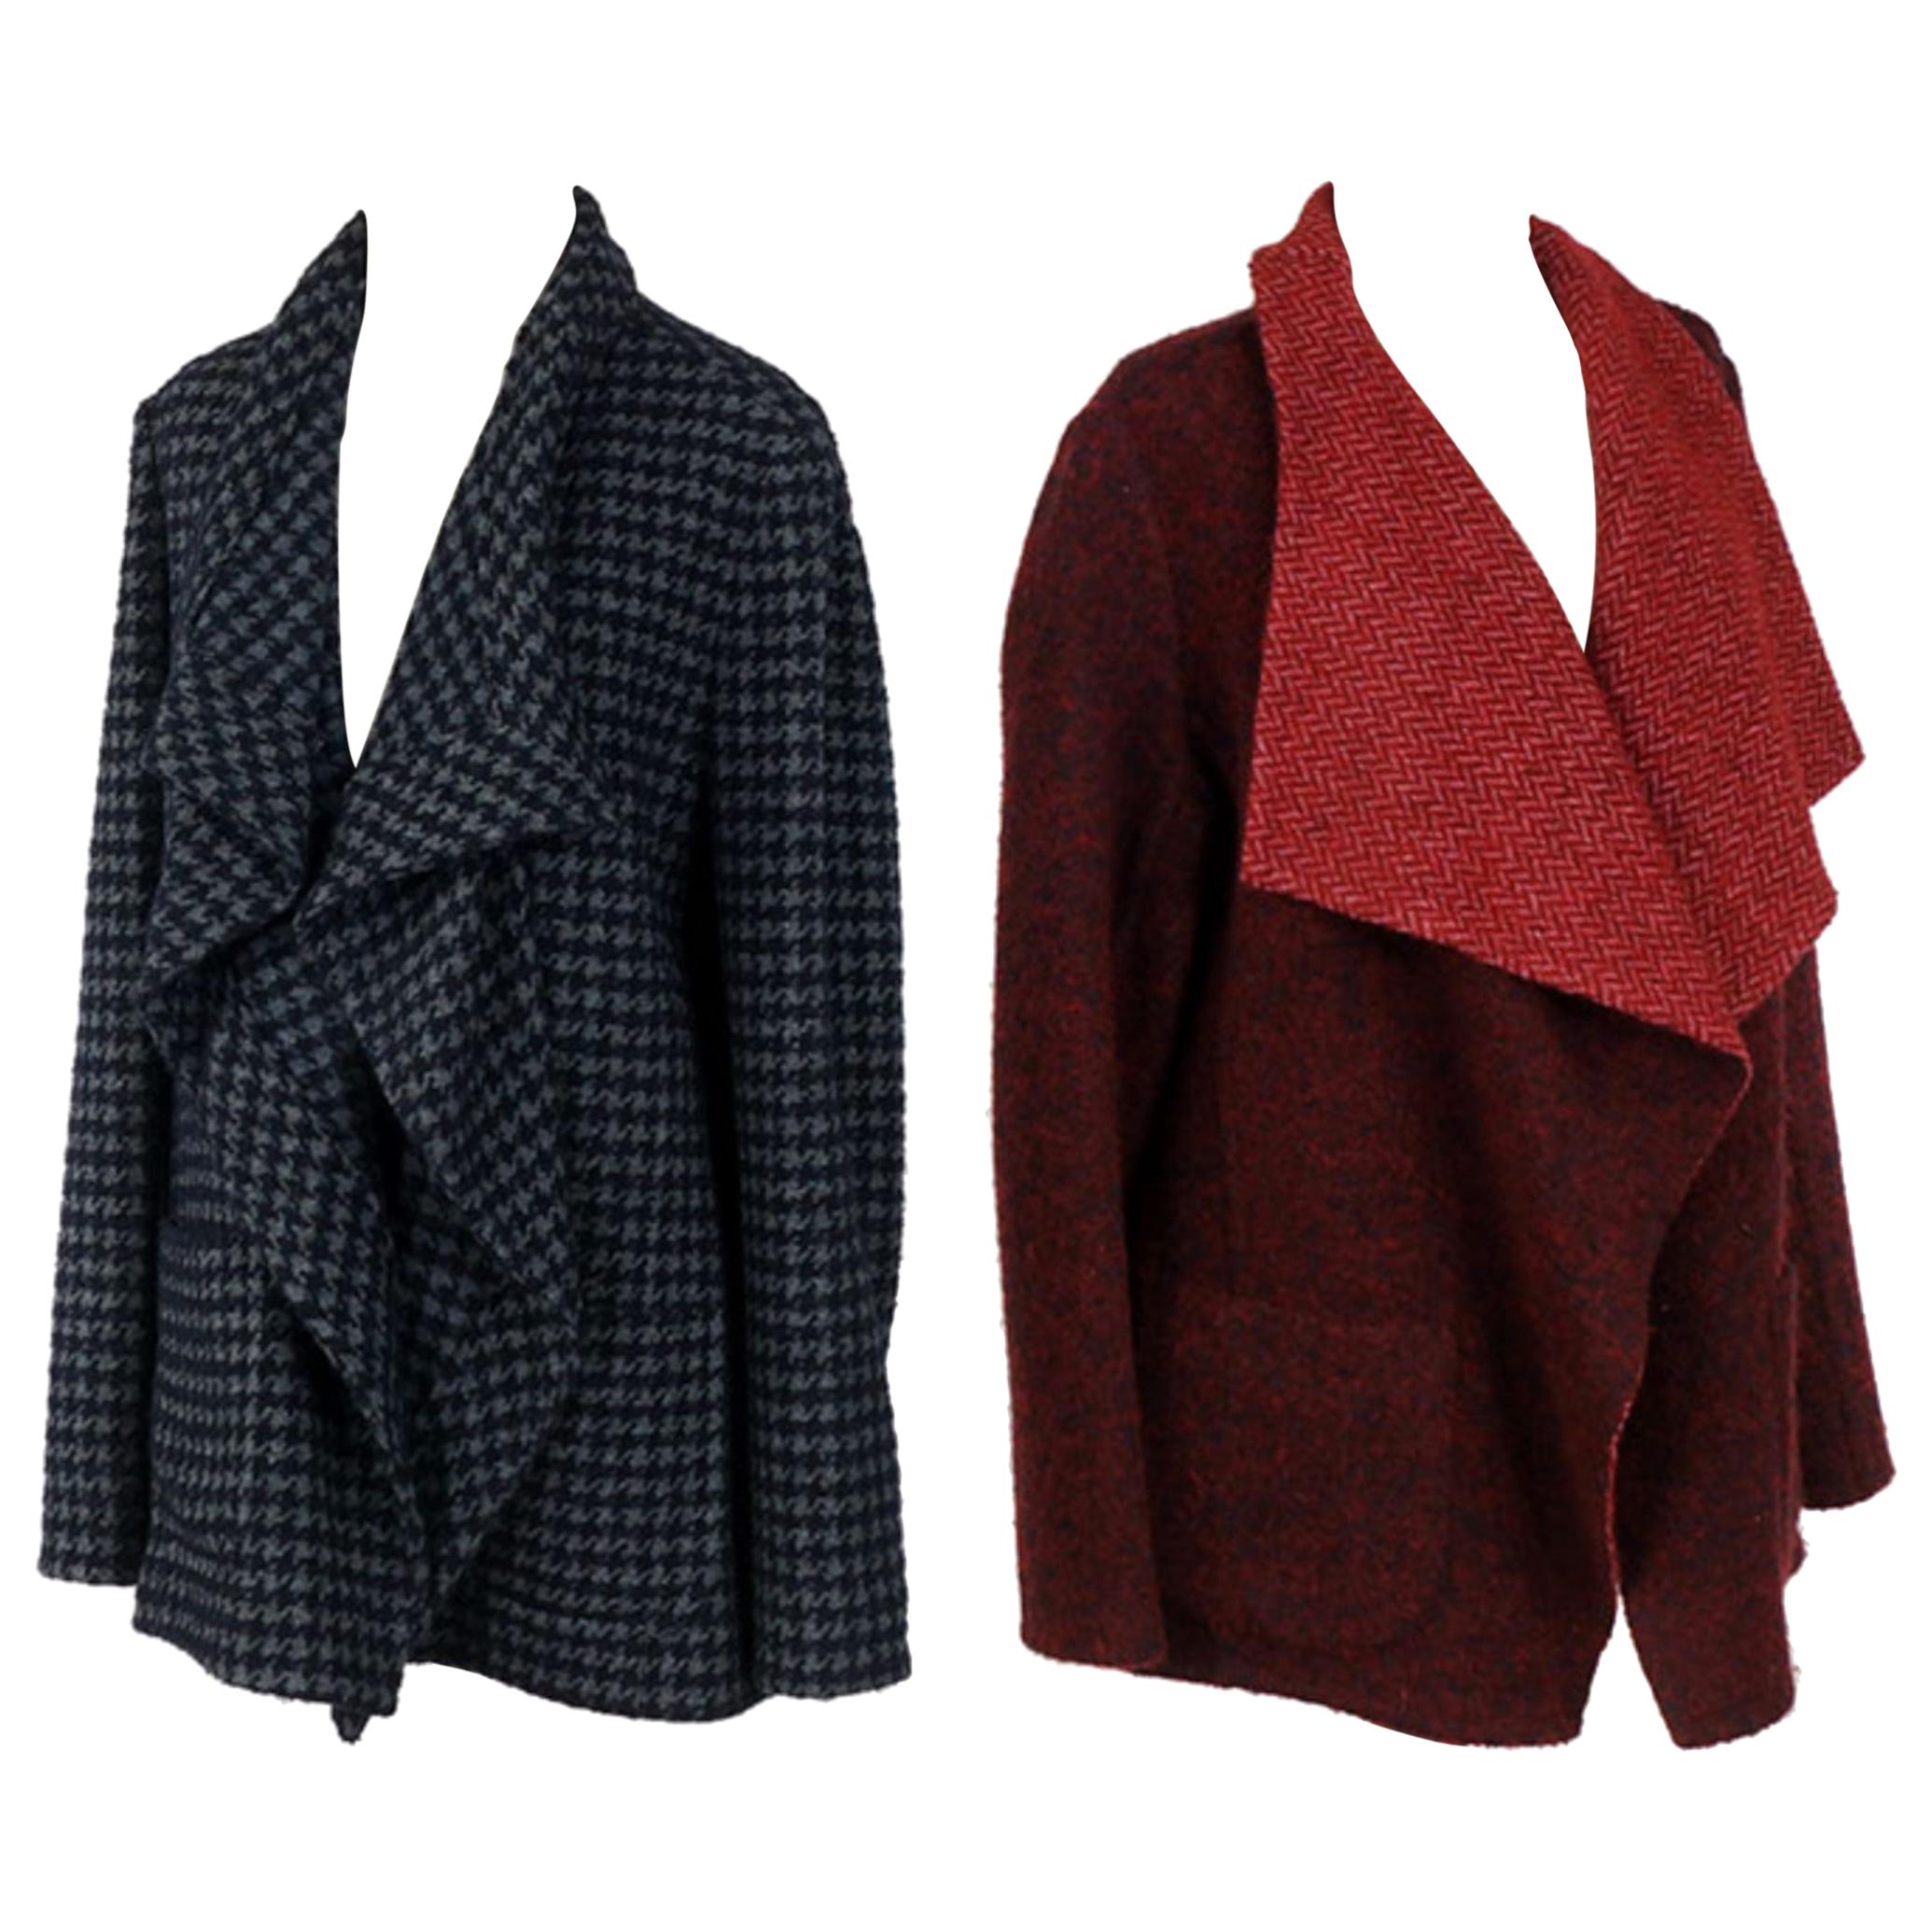 Two Wool/Cashmer Designer Jacketse Blue Houndstooth, Deep Red Reversible Jacket. For Sale